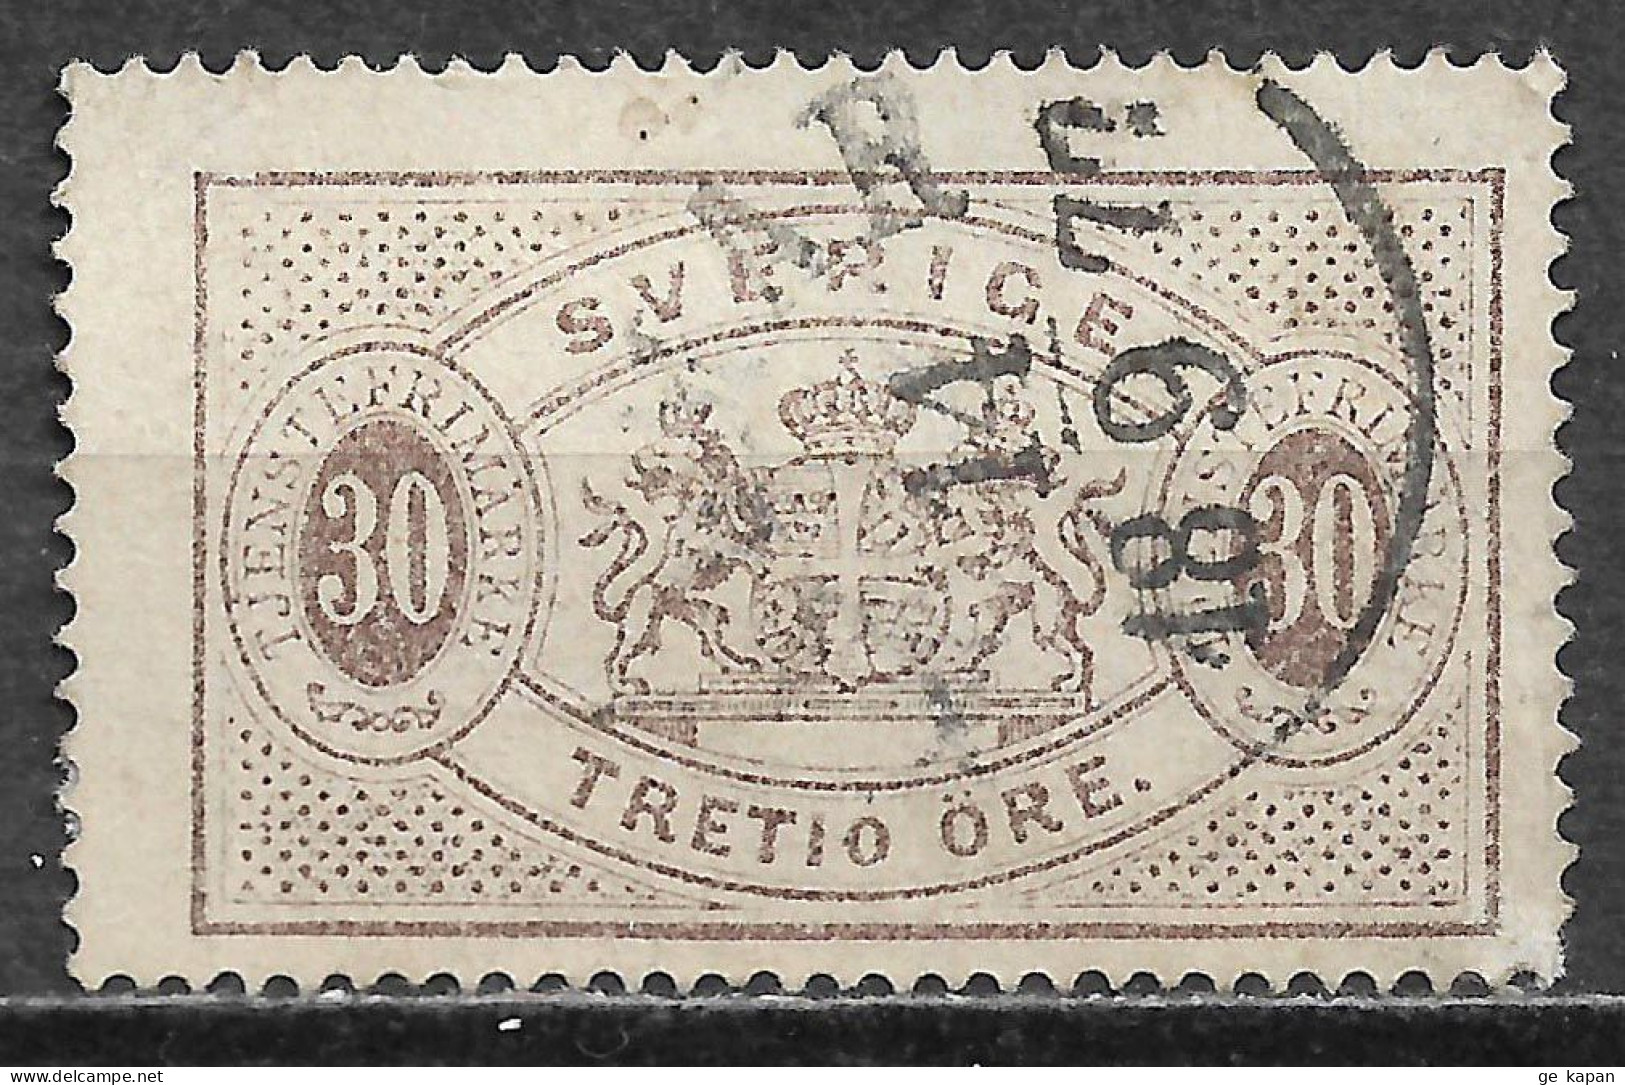 1874 SWEDEN Official USED STAMP Perf.14 (Scott # O9) CV $35.00 - Officials